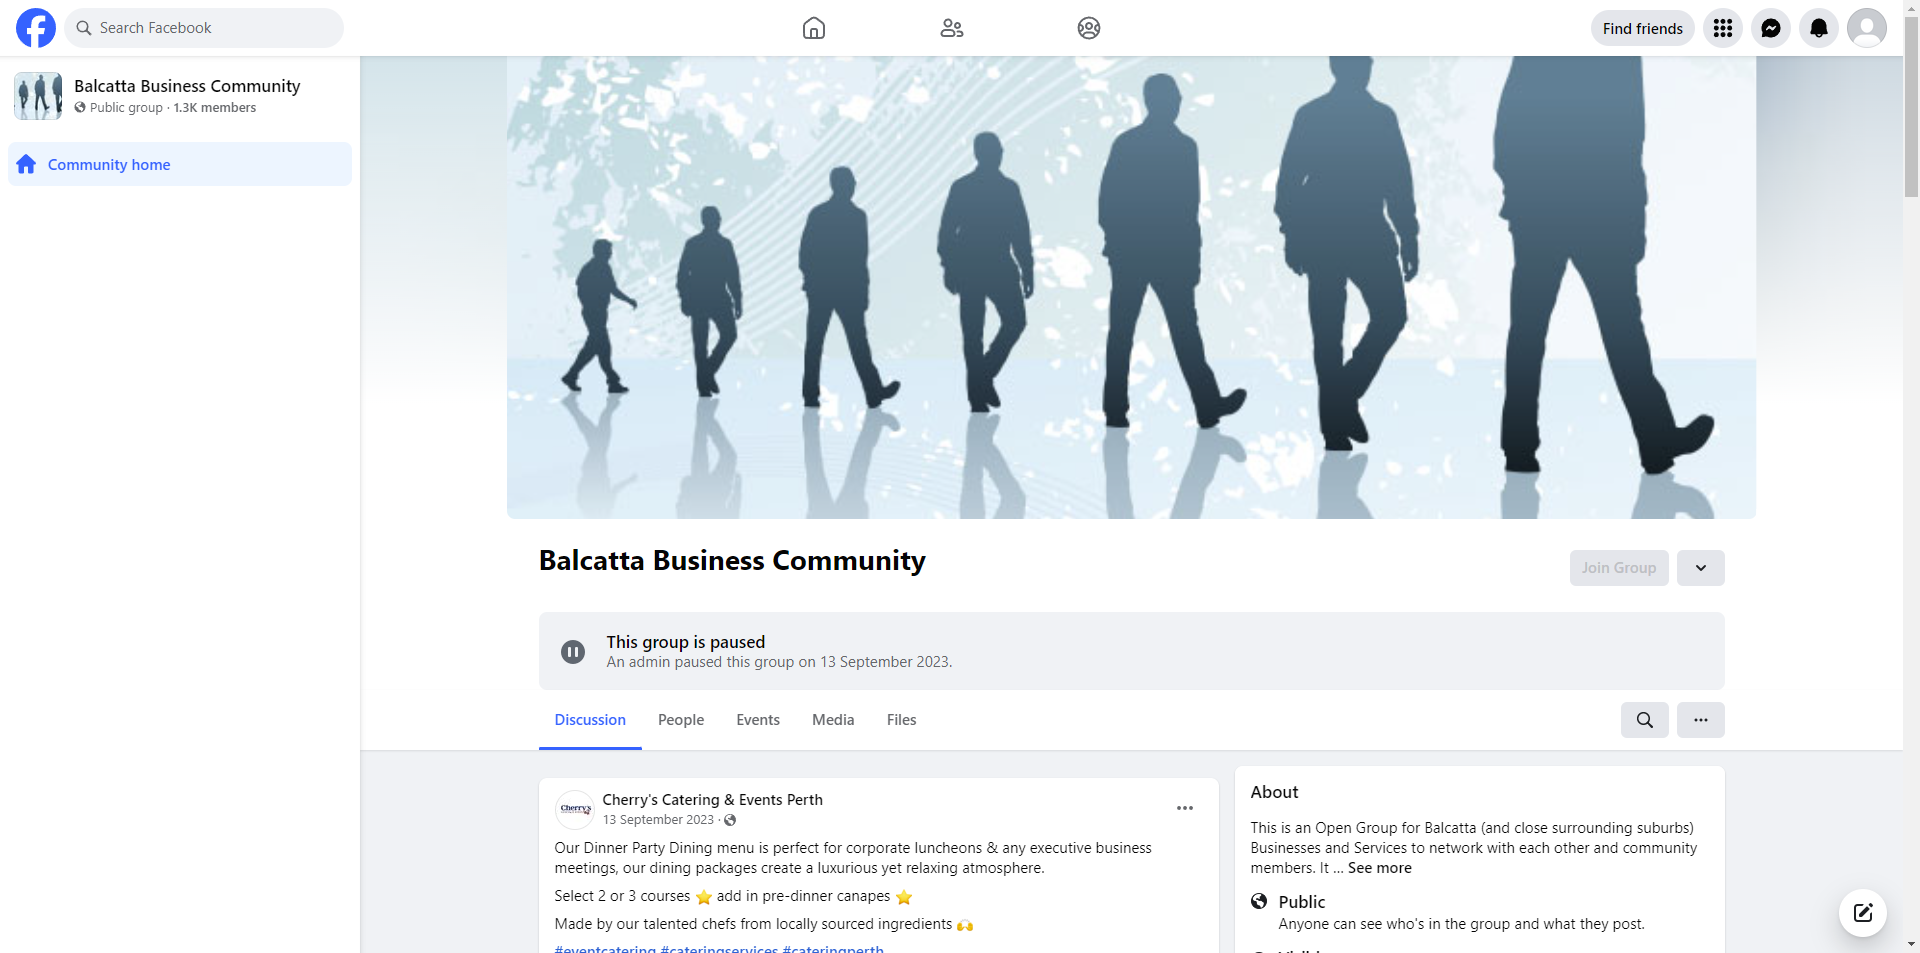 Balcatta Business Community